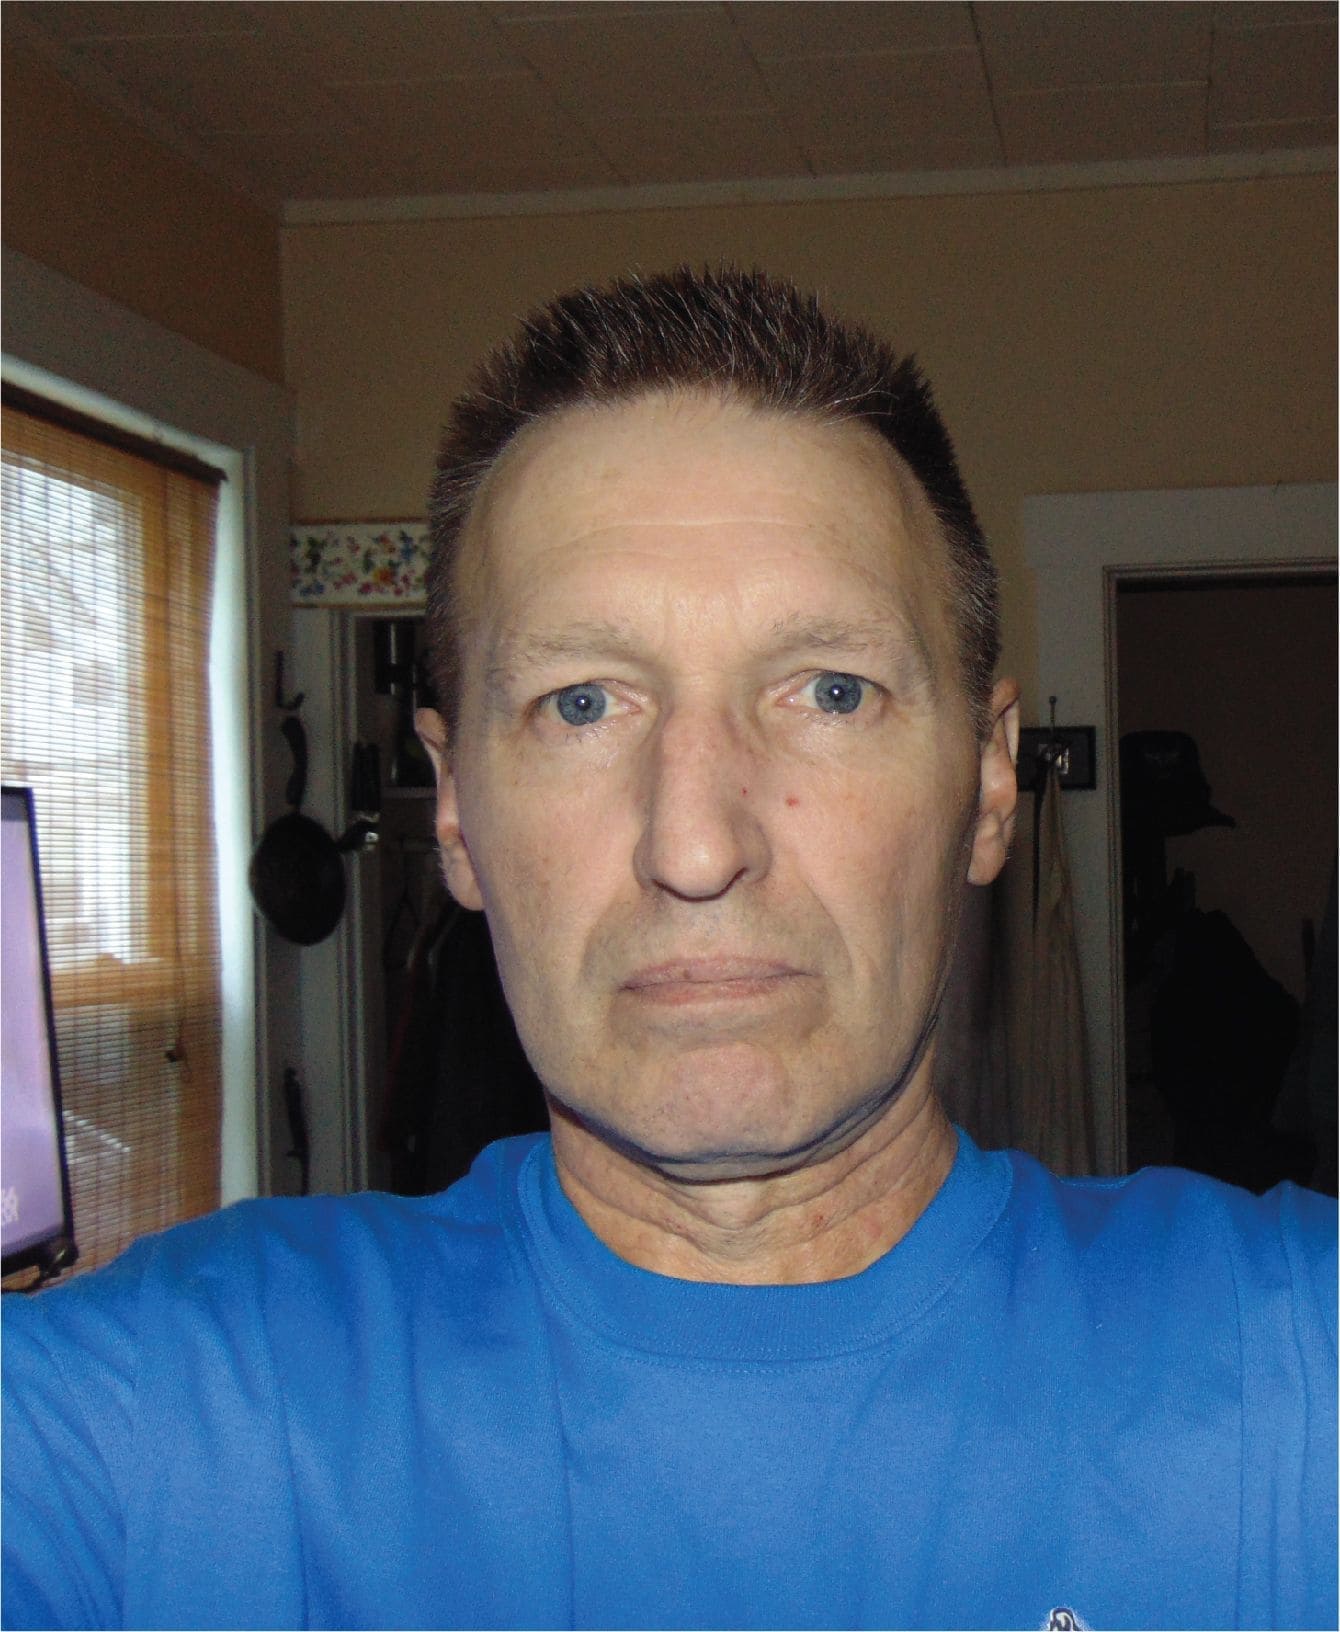 A man wearing a blue shirt, standing confidently.